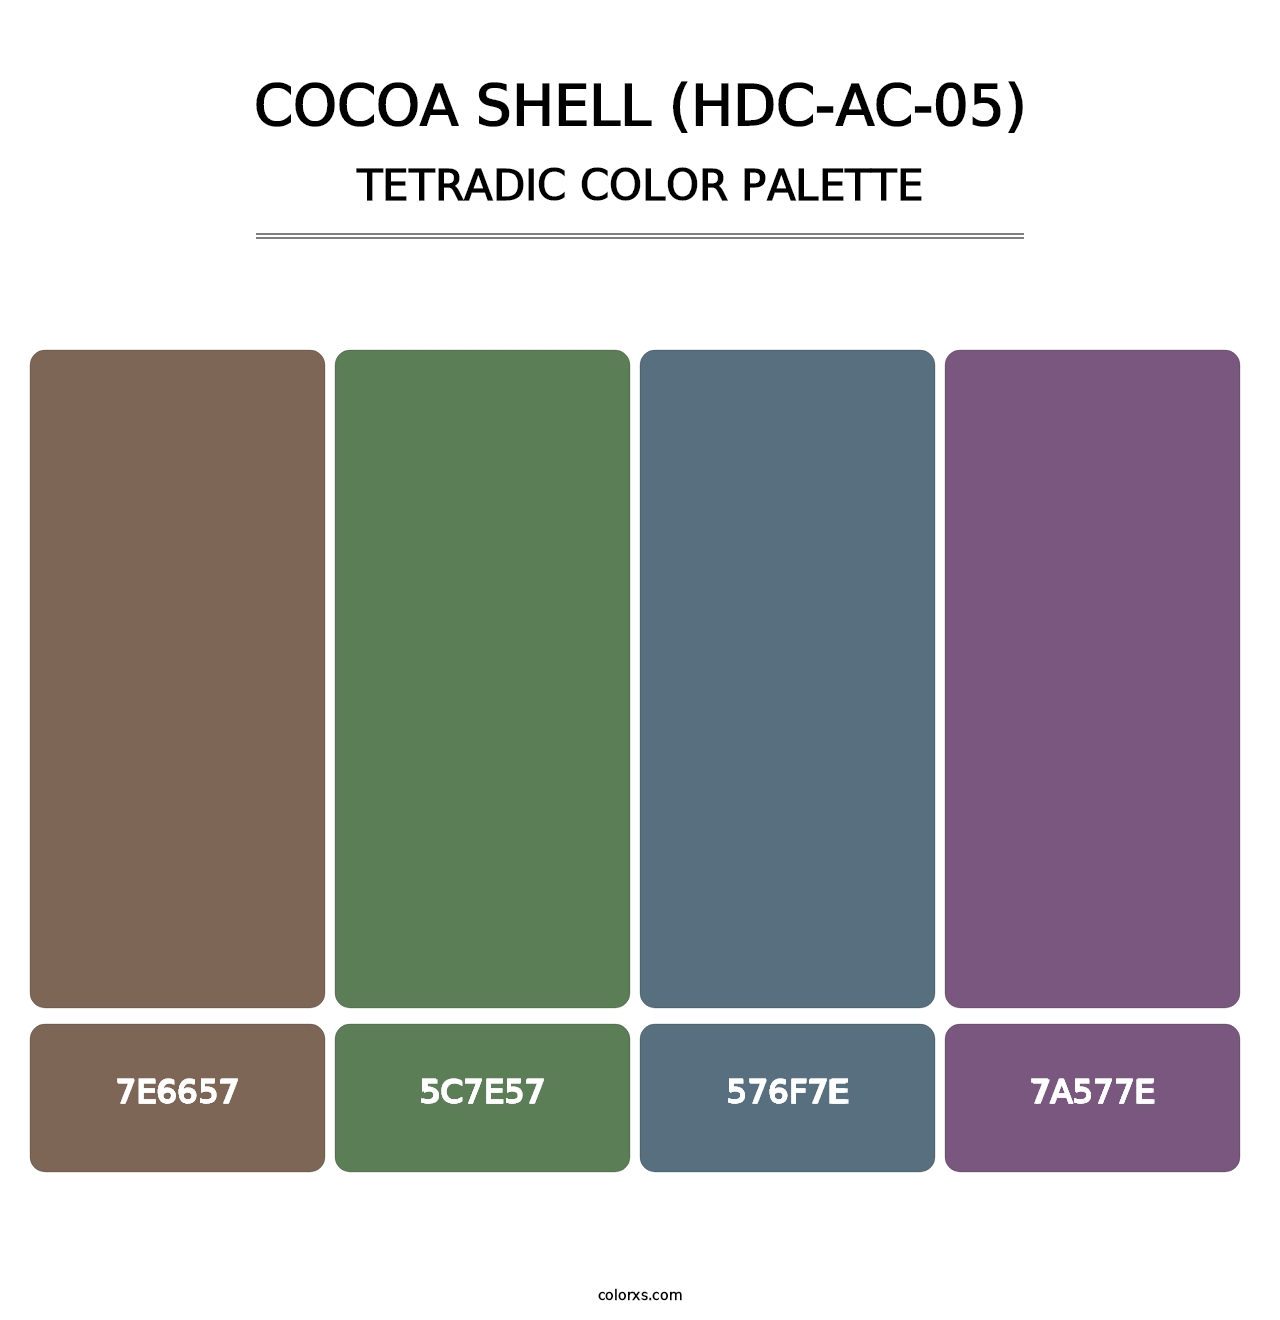 Cocoa Shell (HDC-AC-05) - Tetradic Color Palette